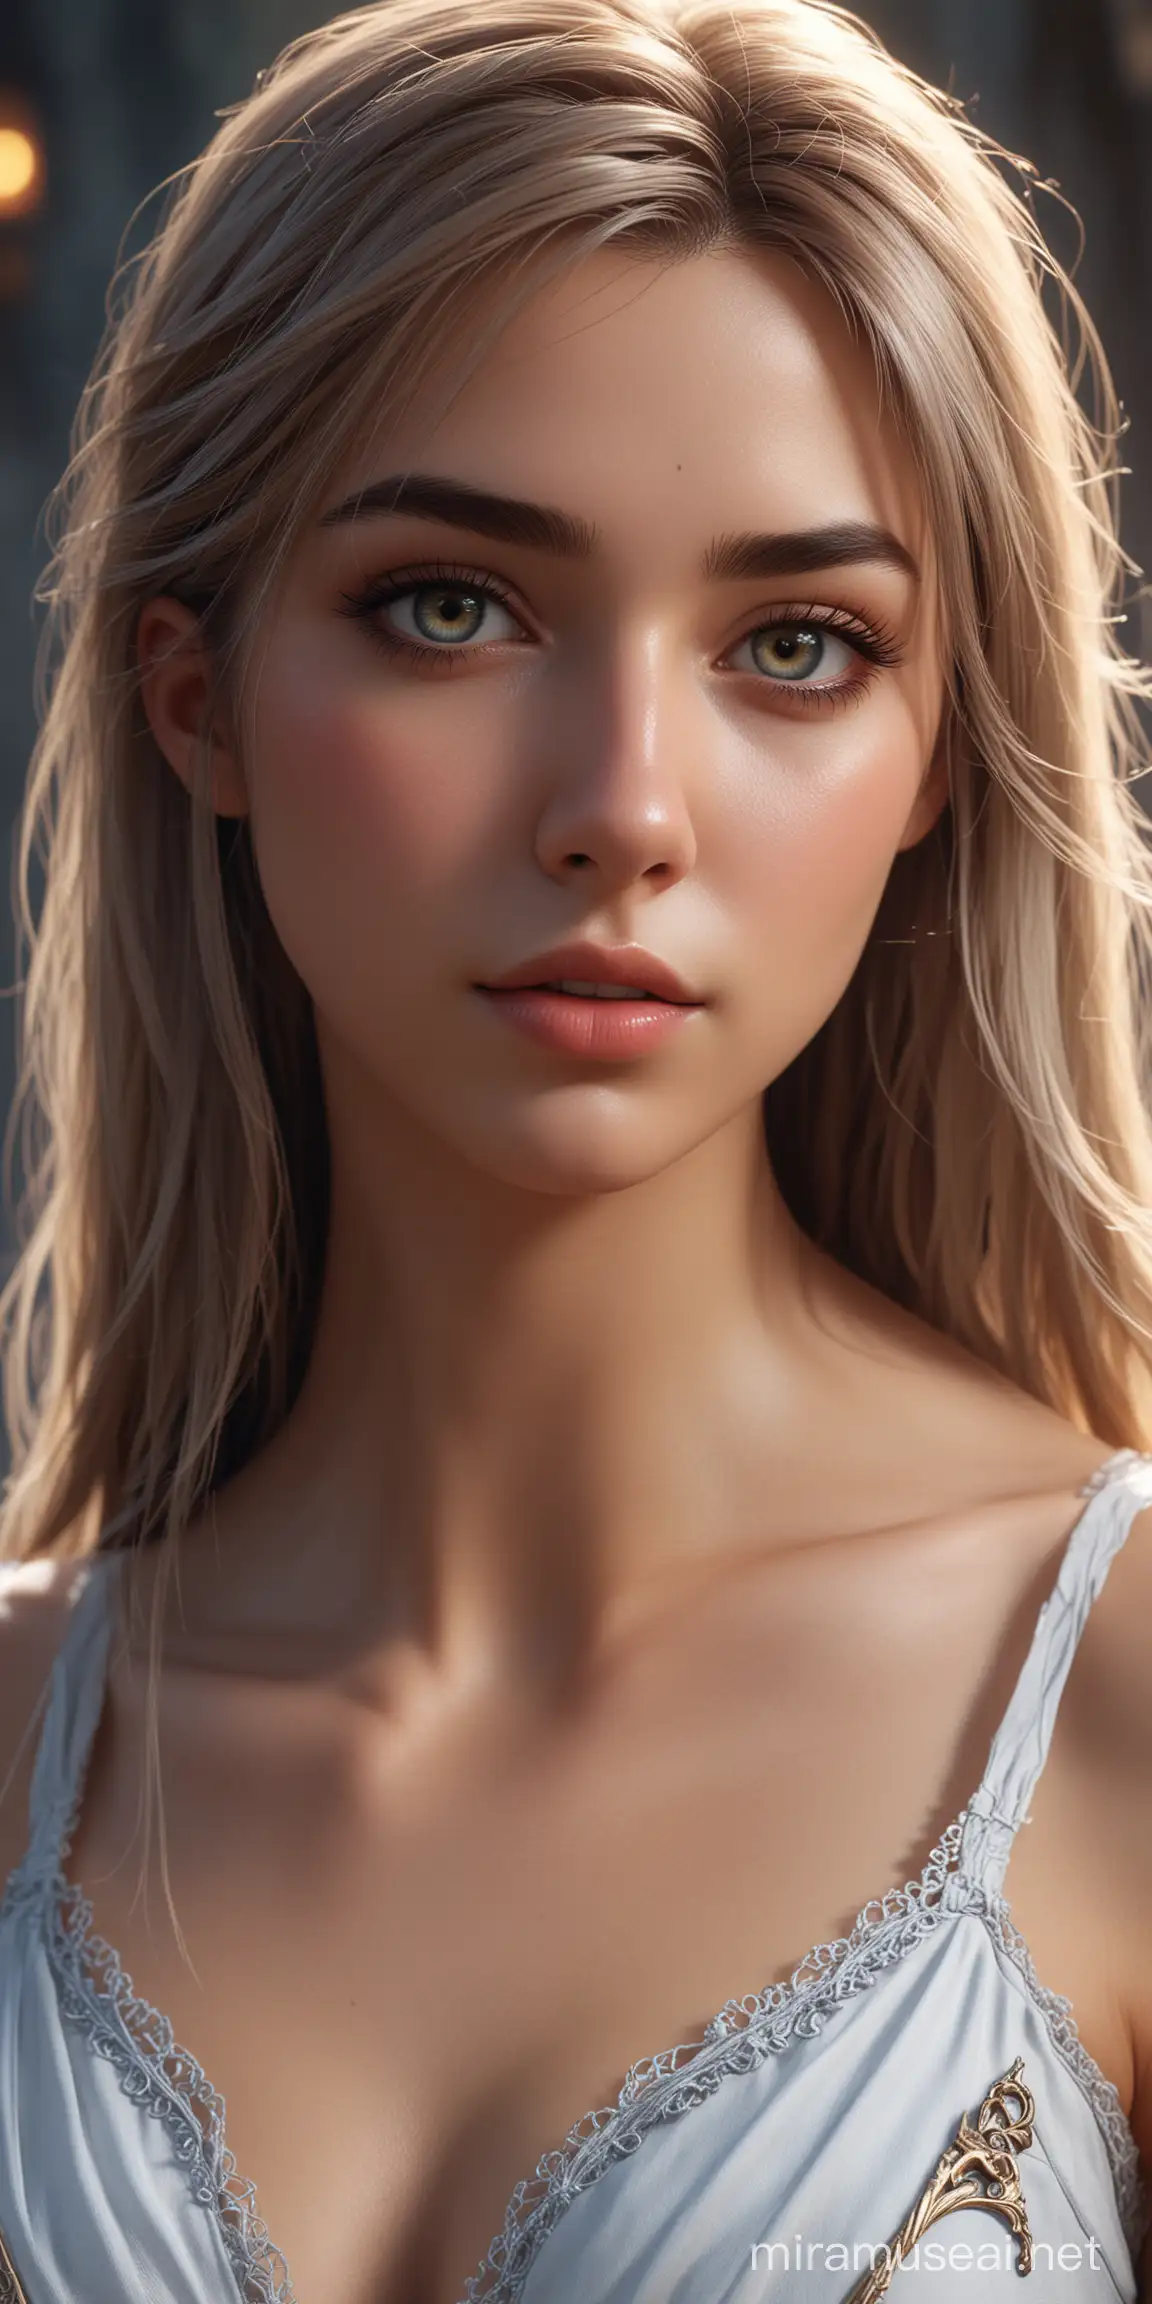 Very beautiful realistic fantasy girl, dholpin element scholar, background fantasy isekai, super detail, cinematic lighting, focused medium shot, UHD, perfect anatomy